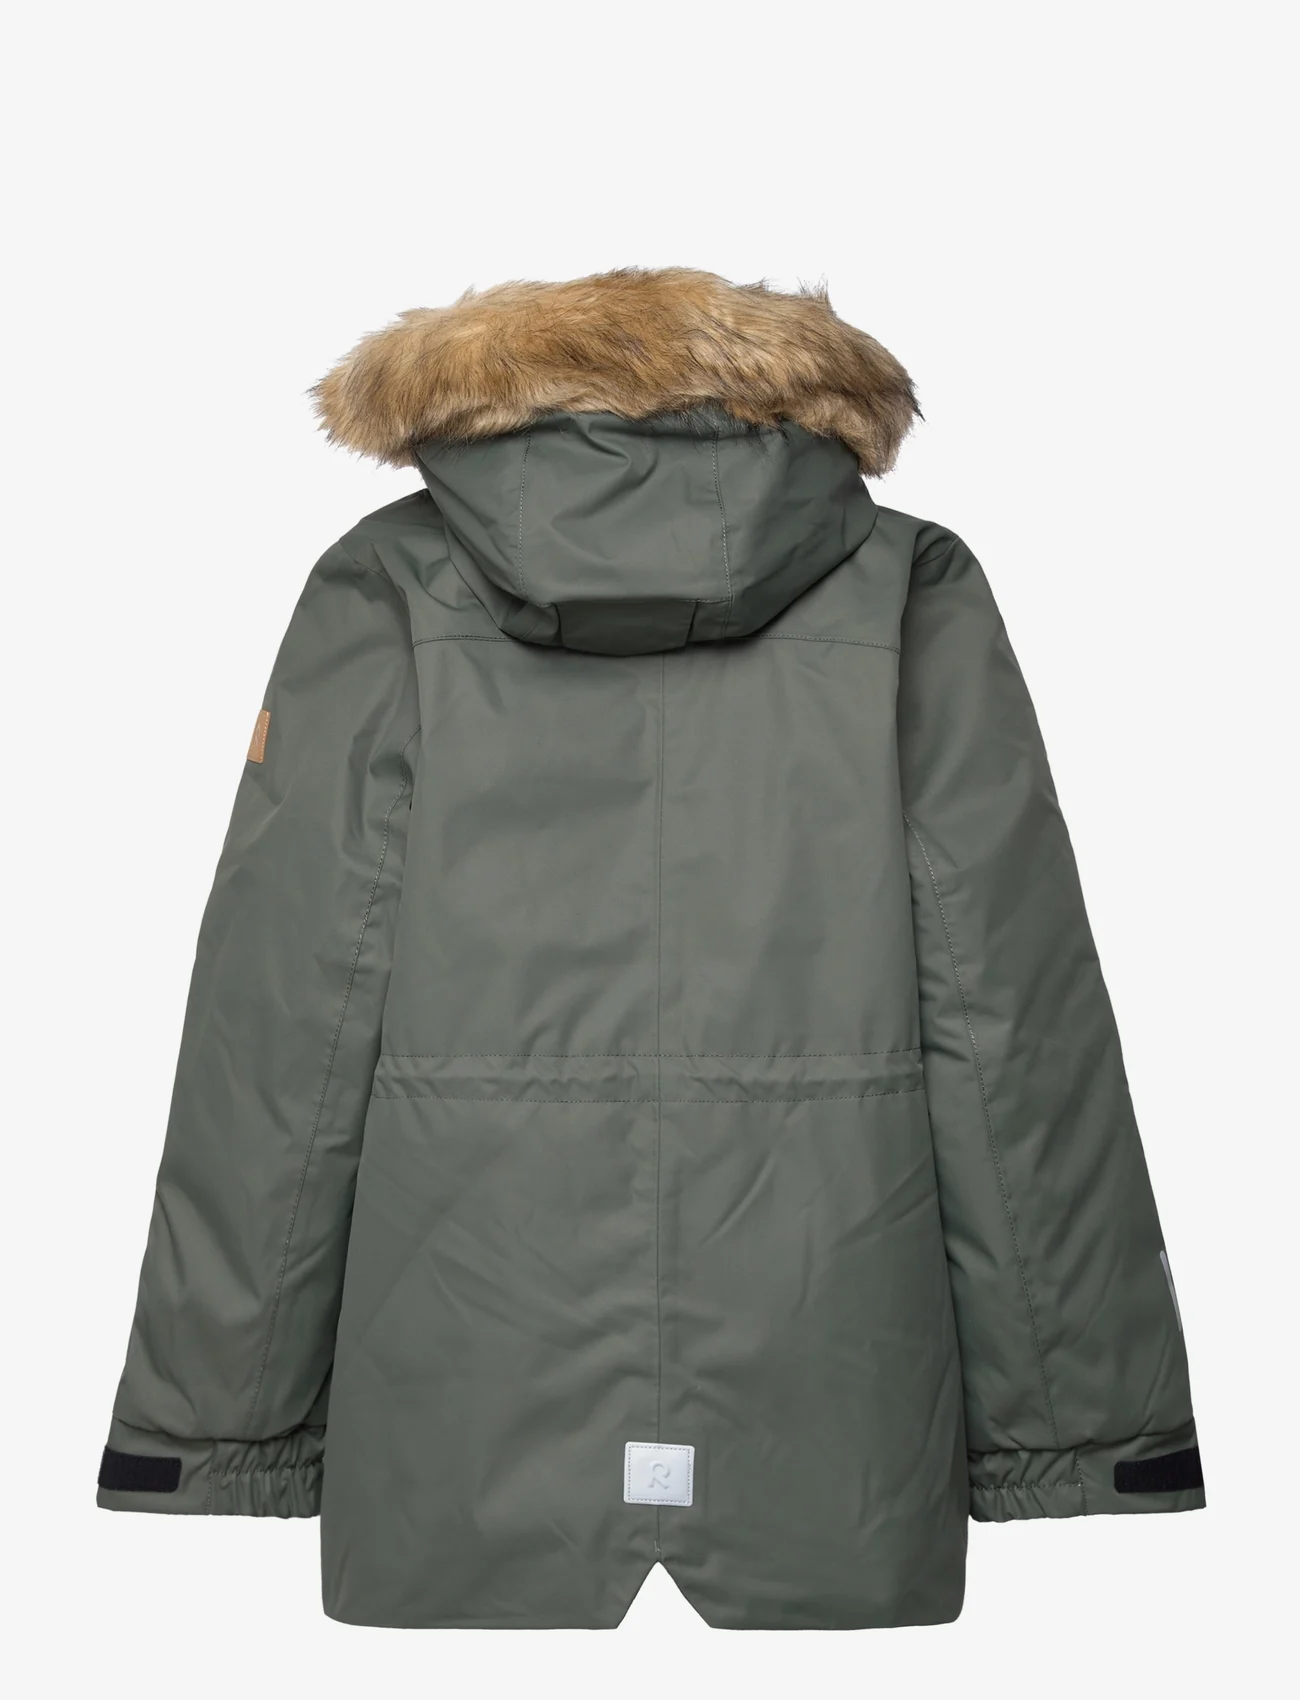 Reima - Reimatec winter jacket, Naapuri - parkas - thyme green - 1